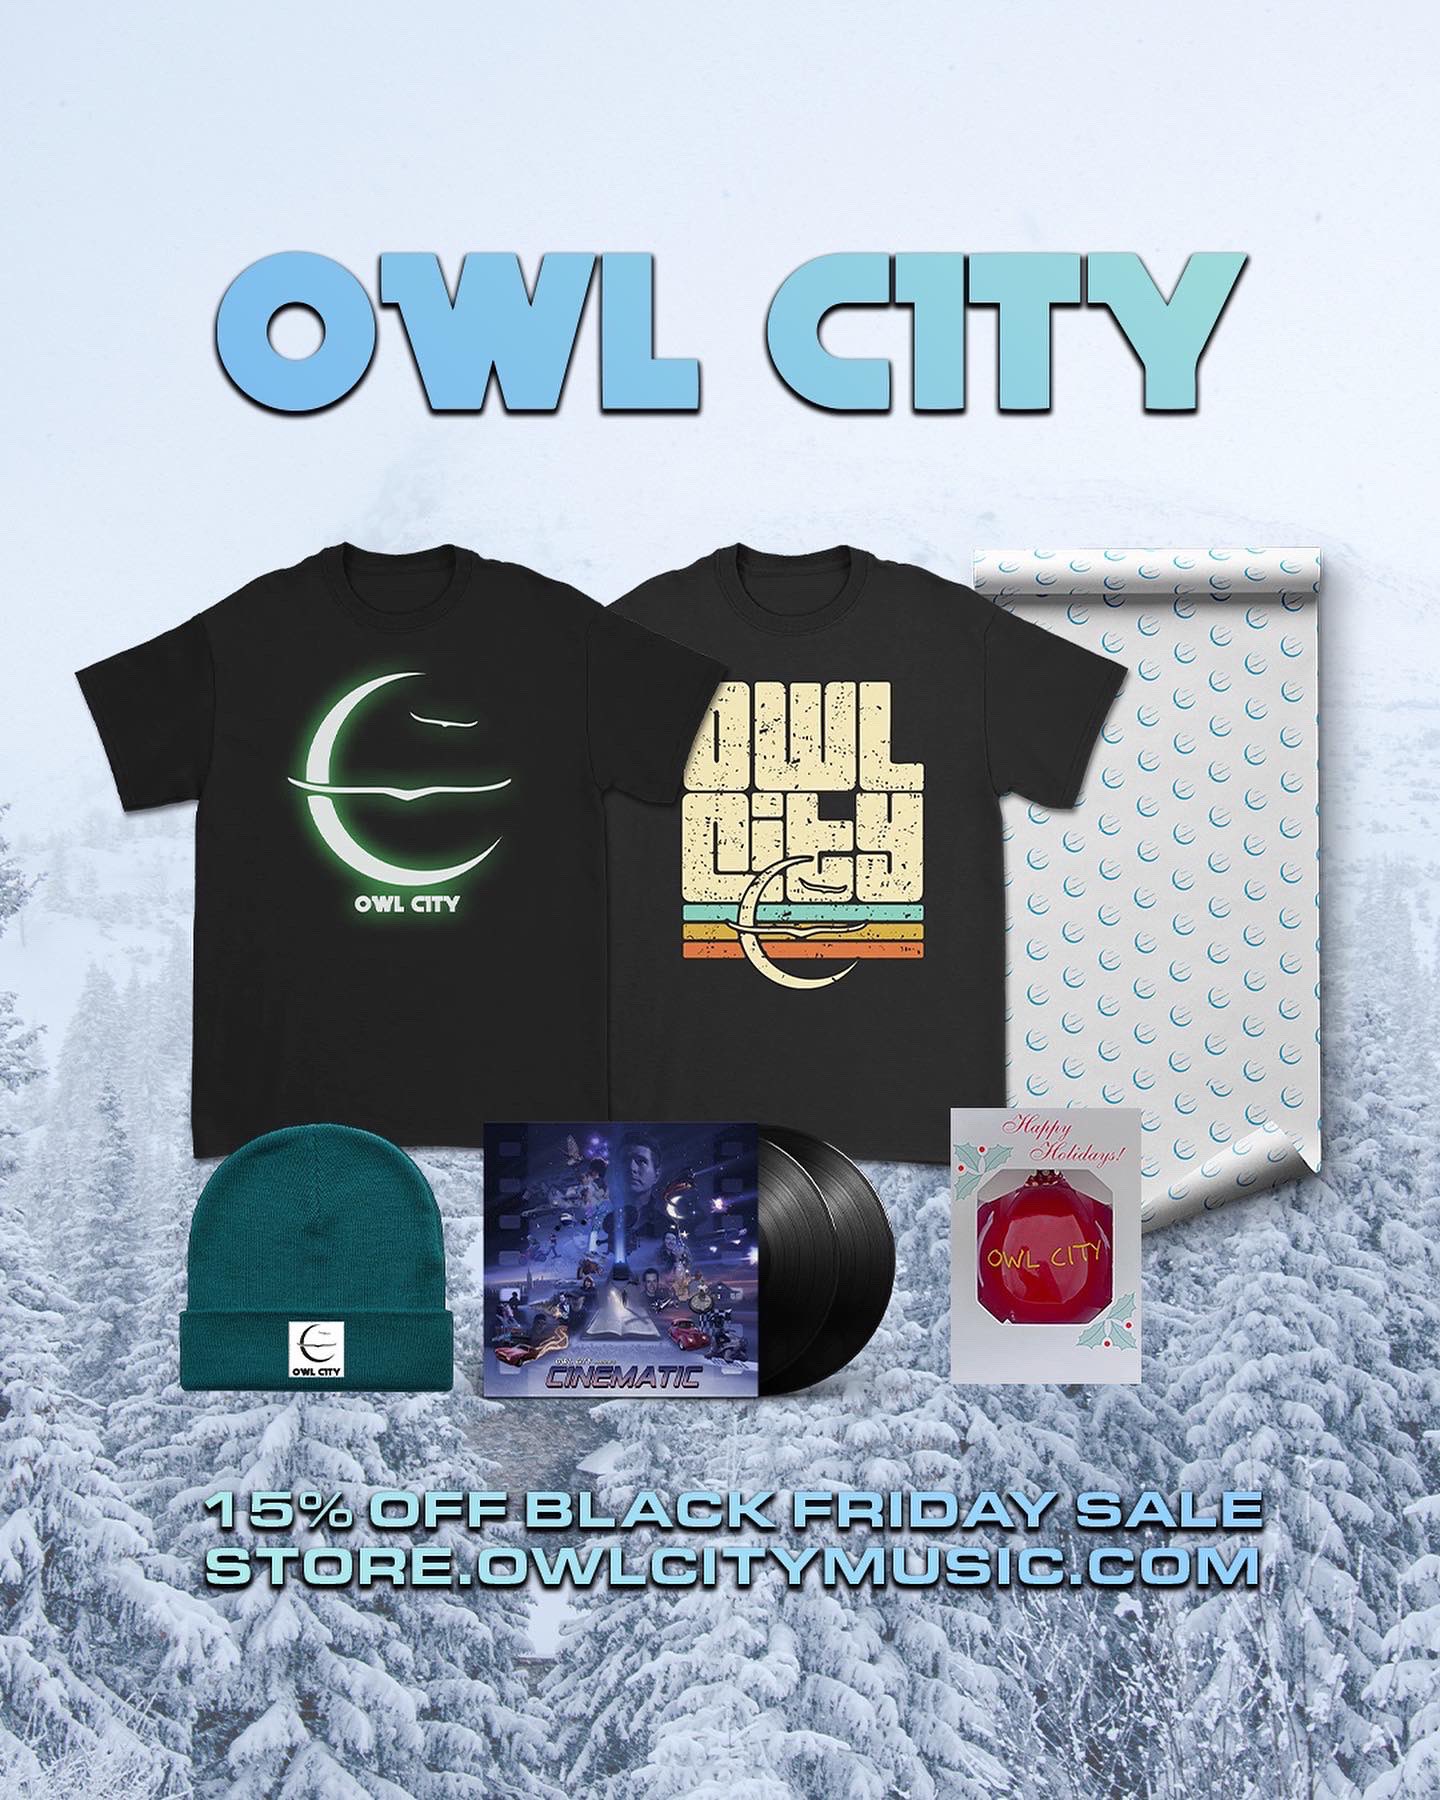 Owl City Owlcity Twitter